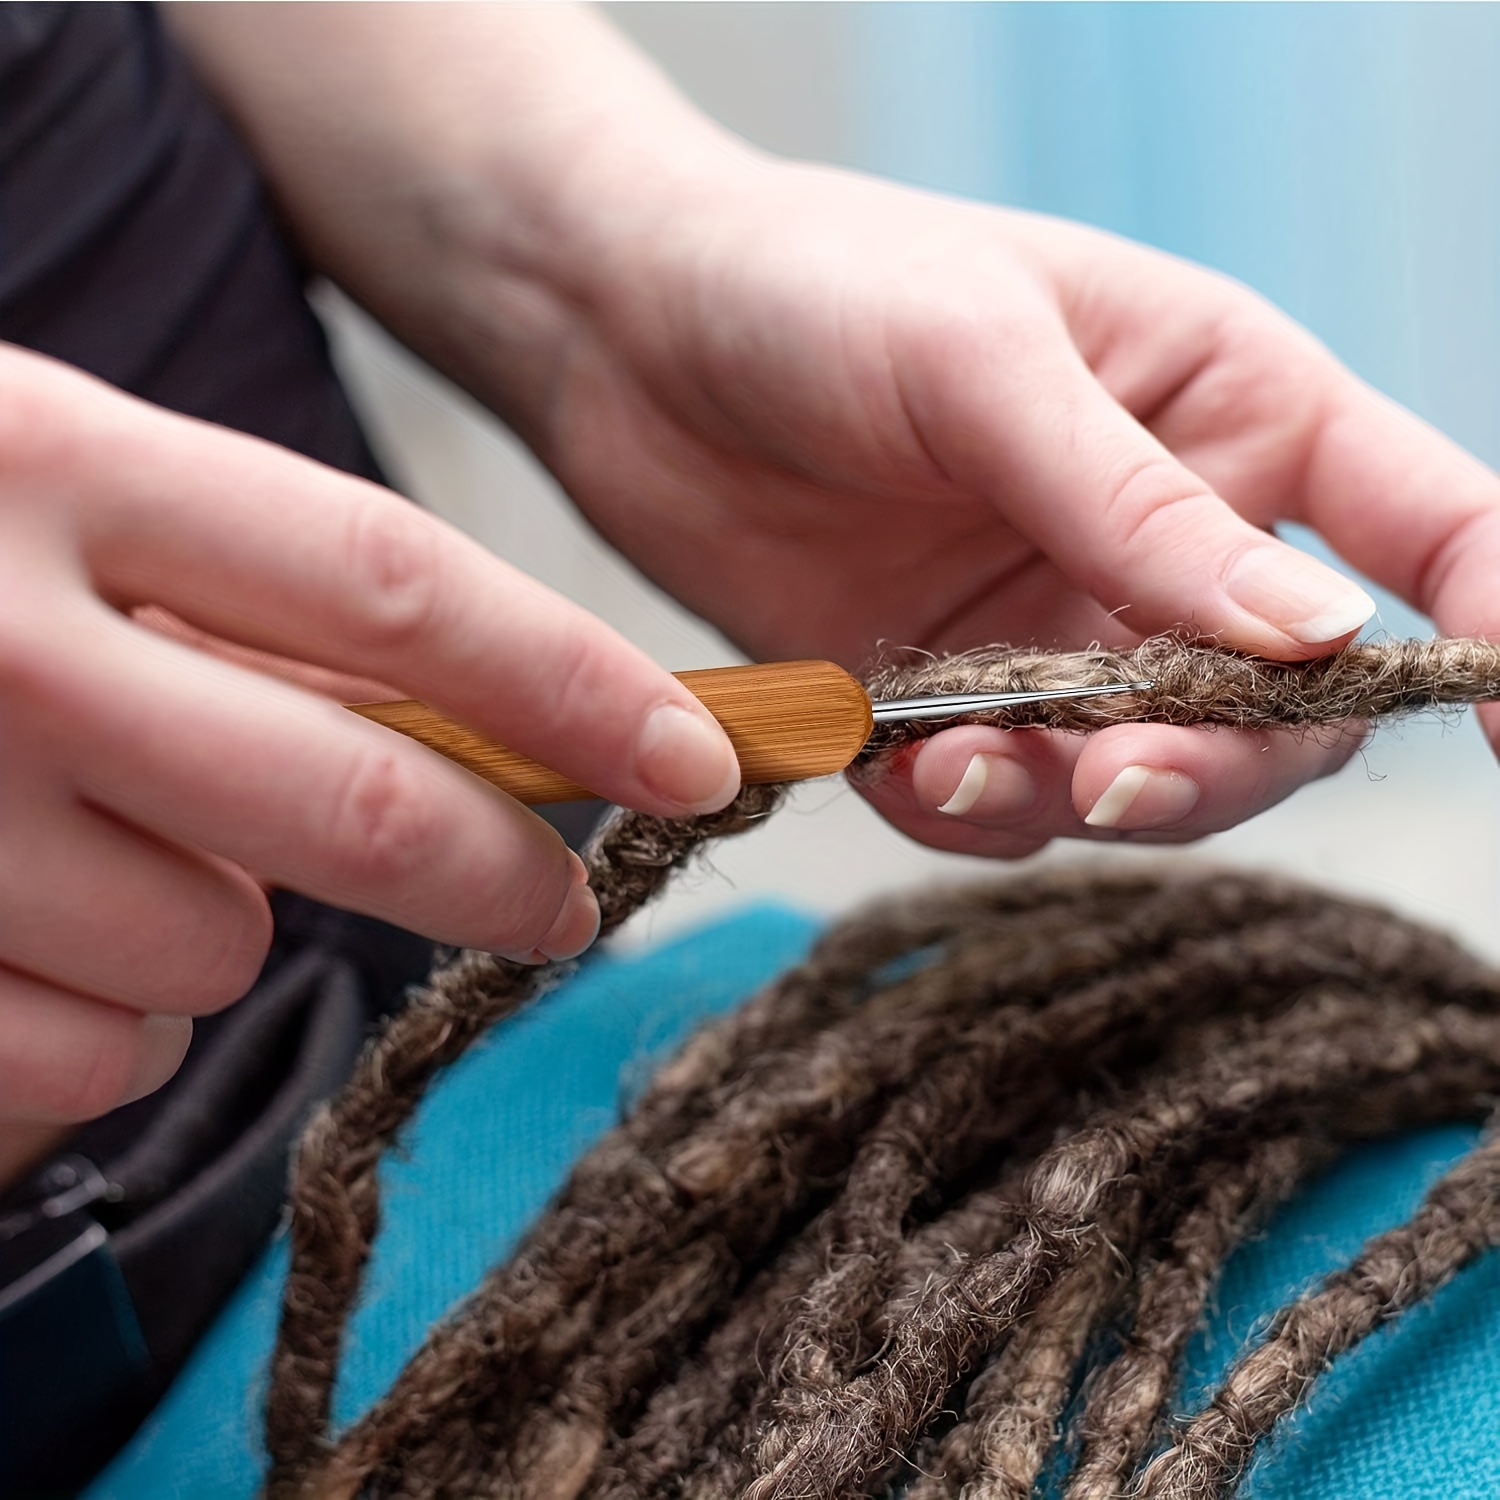 Crochet Hook Needle 0.5mm for Dreadlock Tool Loc Extensions Repair